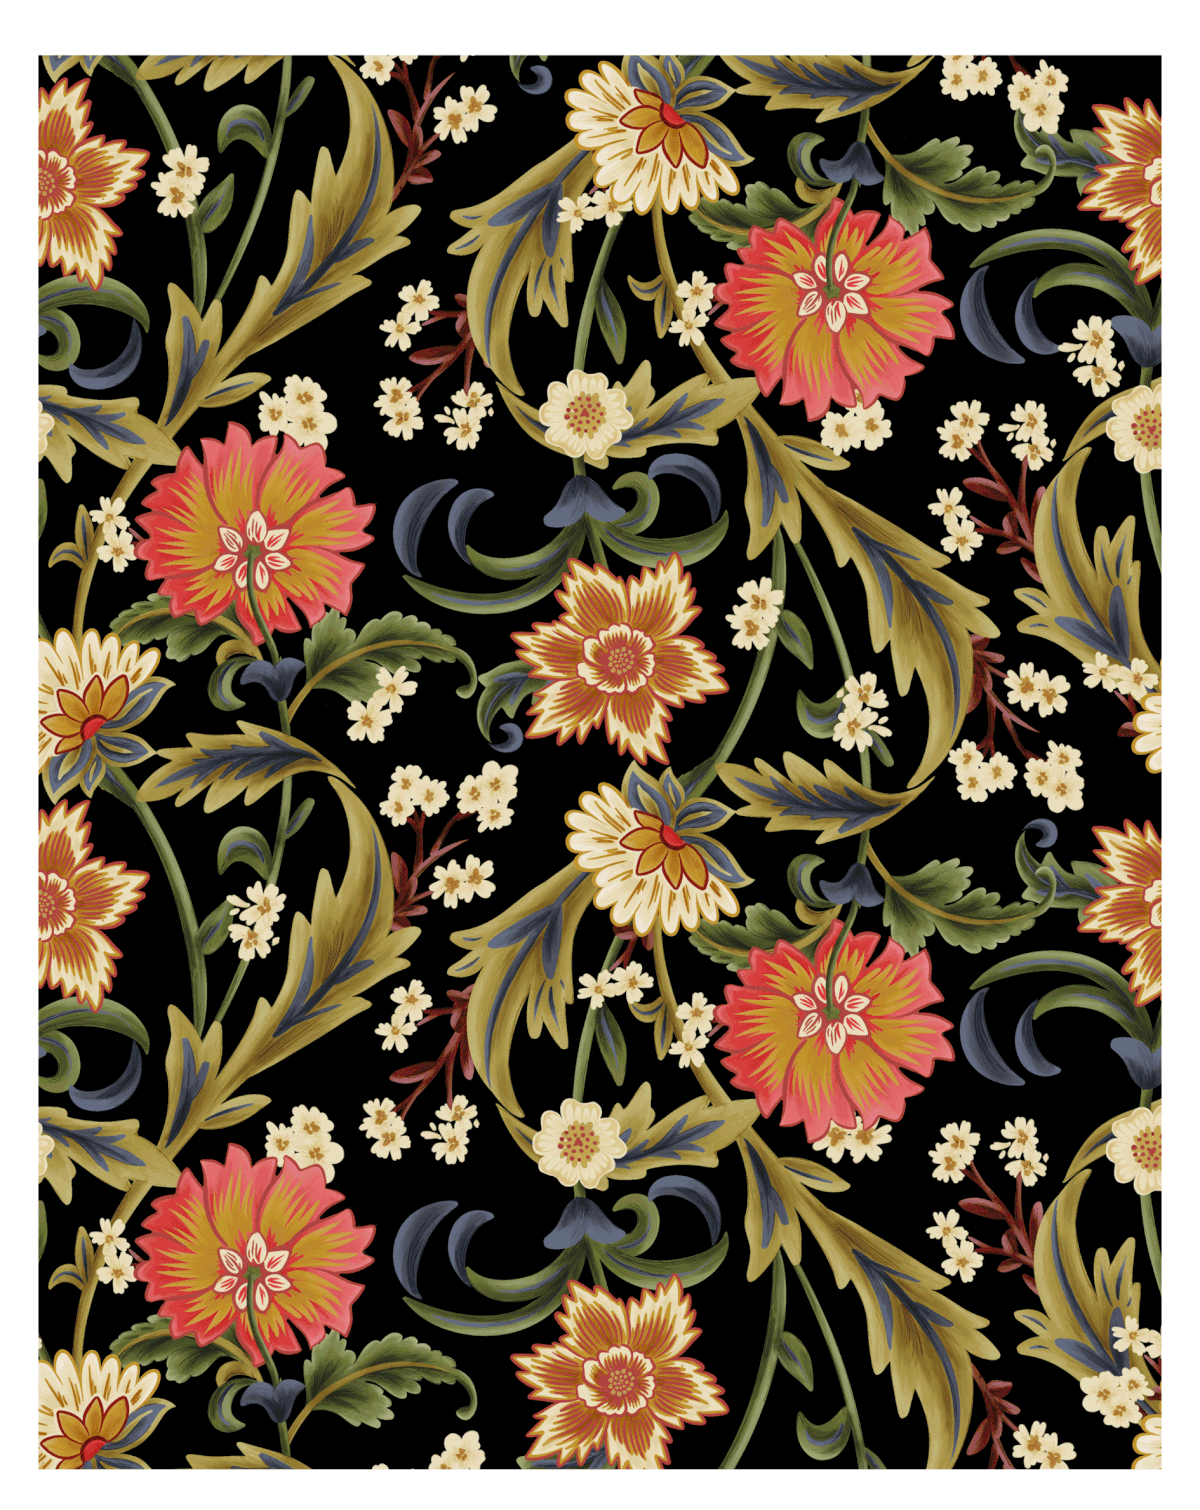 pattern print Fashion  Flowers ILLUSTRATION  graphic design  all over print textil design